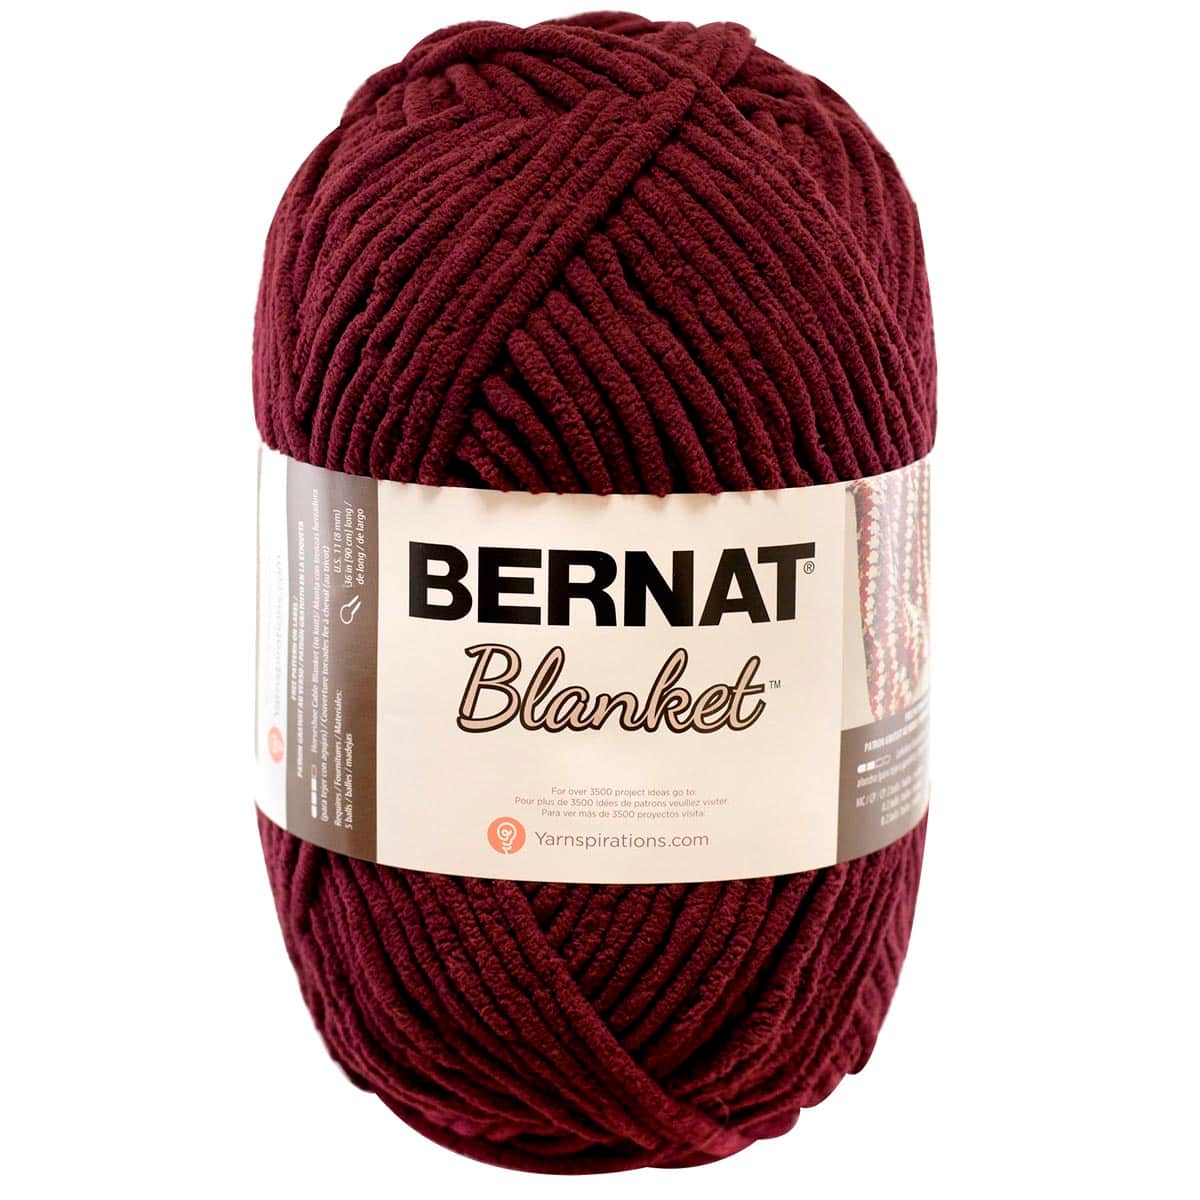 2 Pack of 300g/10.5oz Polyester Knitting/Crochet 7 Jumbo 97 Yards Bernat Blanket Extra Burgundy Plum Yarn 